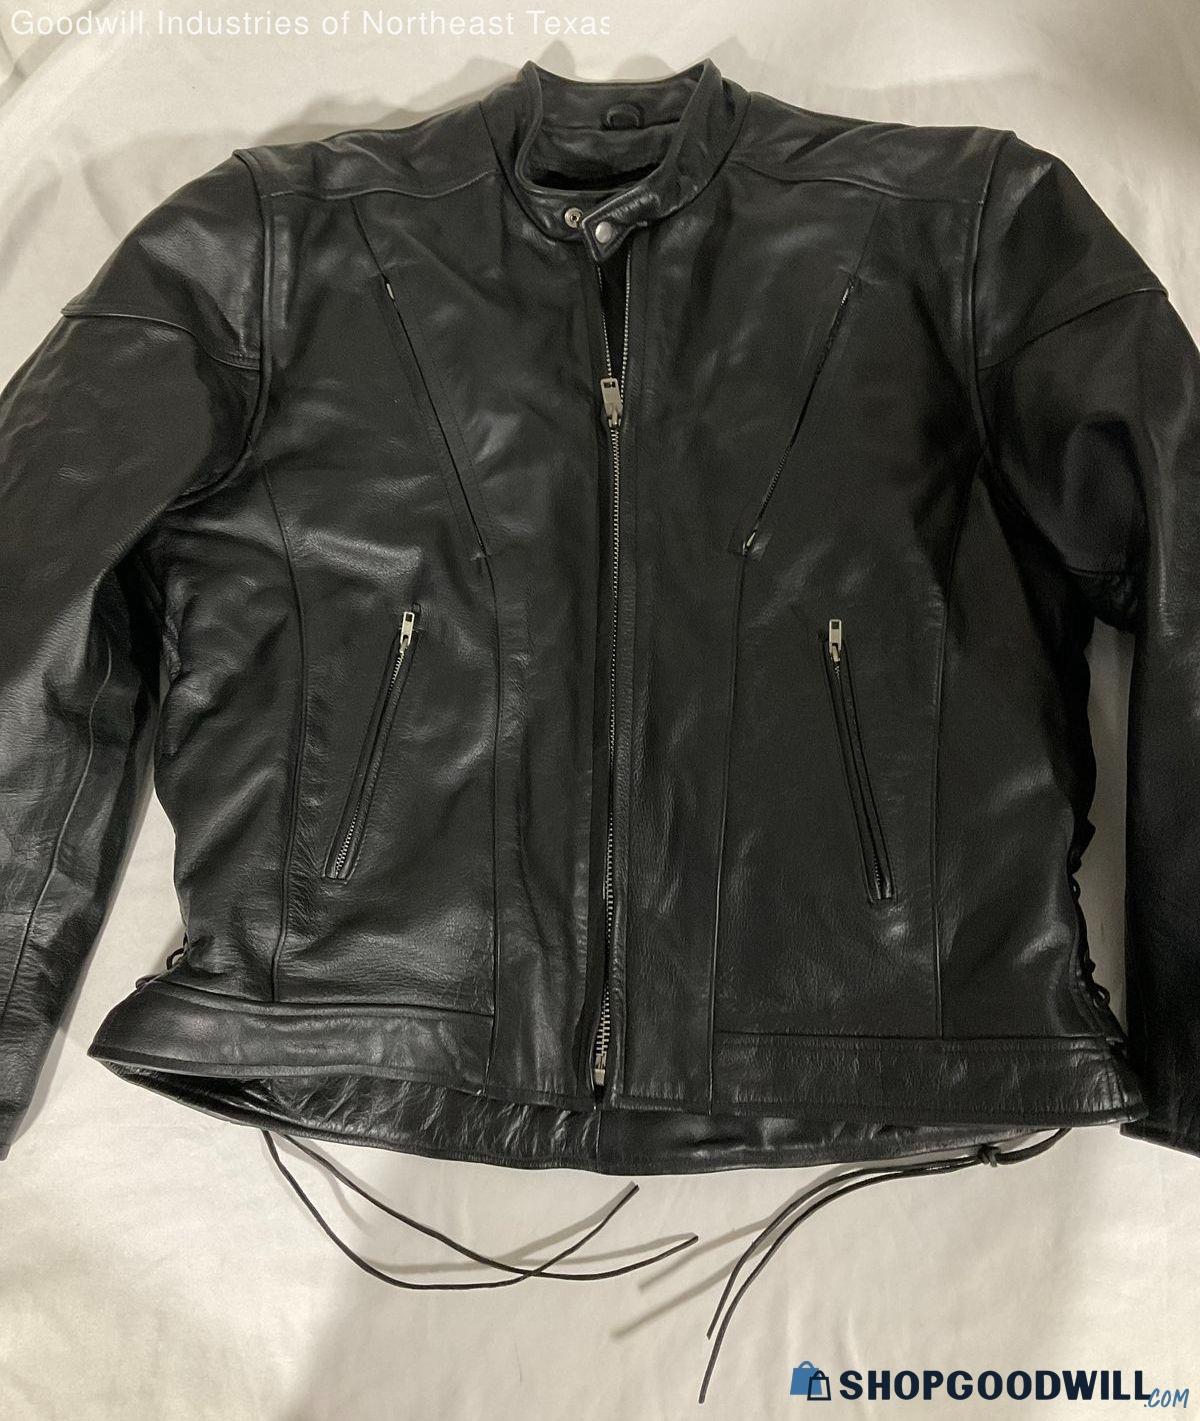 Vintage Jim Leather Inc. Black Leather Motorcycle Jacket - shopgoodwill.com